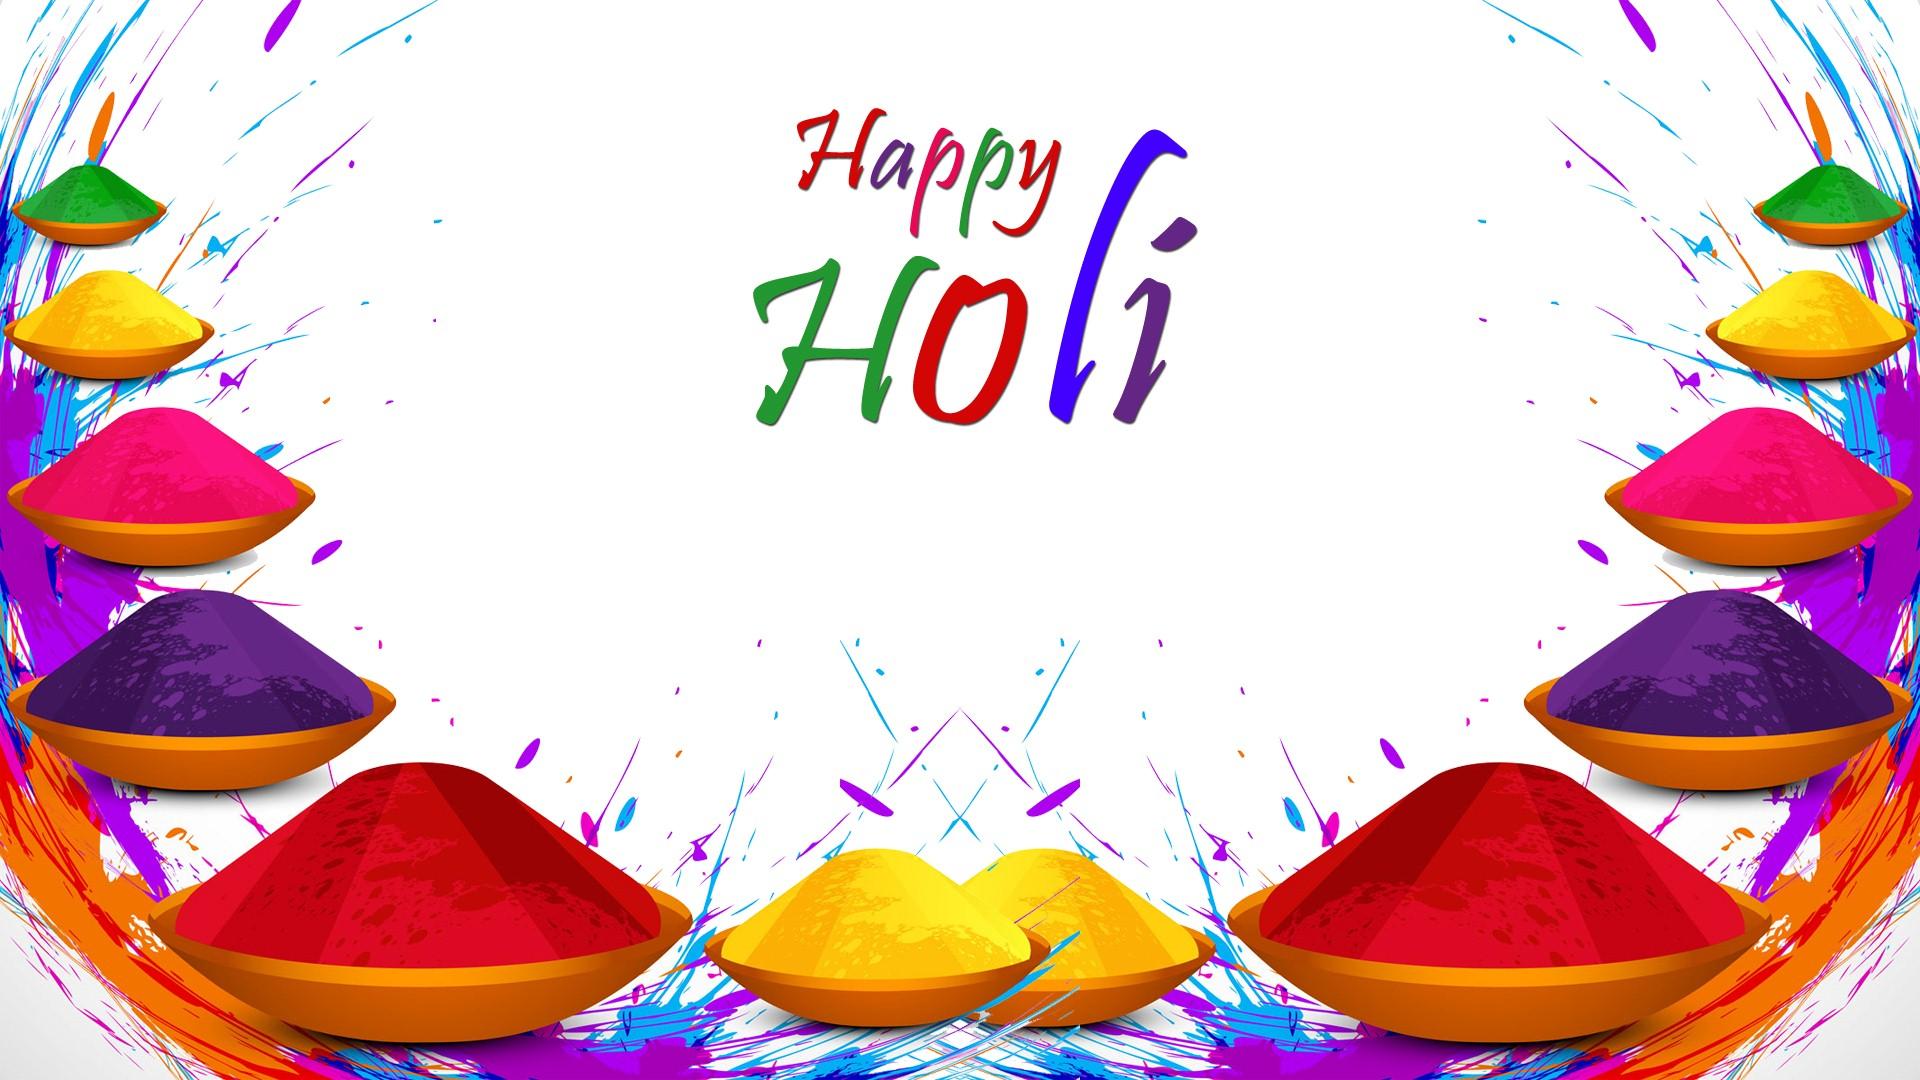 Happy Holi Desktop Wallpaper Download Free Now